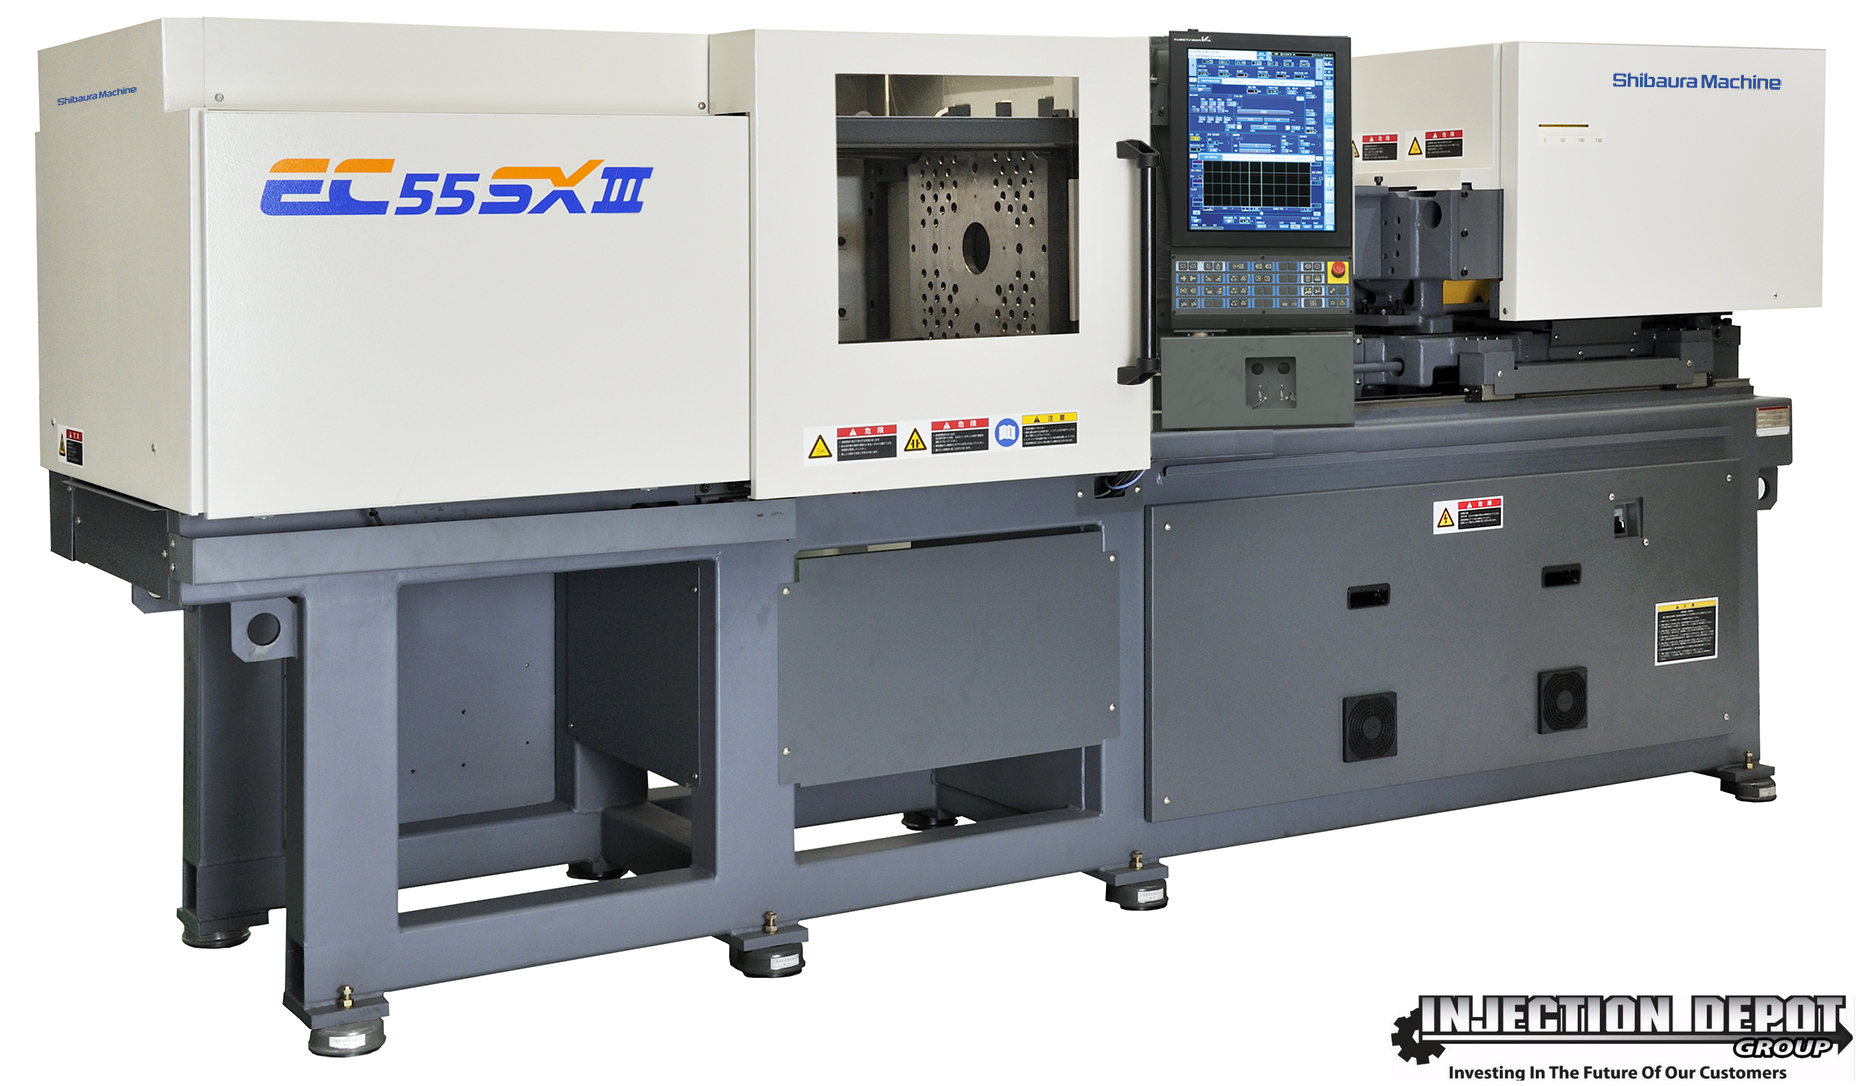 SHIBAURA MACHINE EC55SXIIIV70-U1.5 1.5A Horizontal Injection Moulding Machines | INJECTION DEPOT GROUP